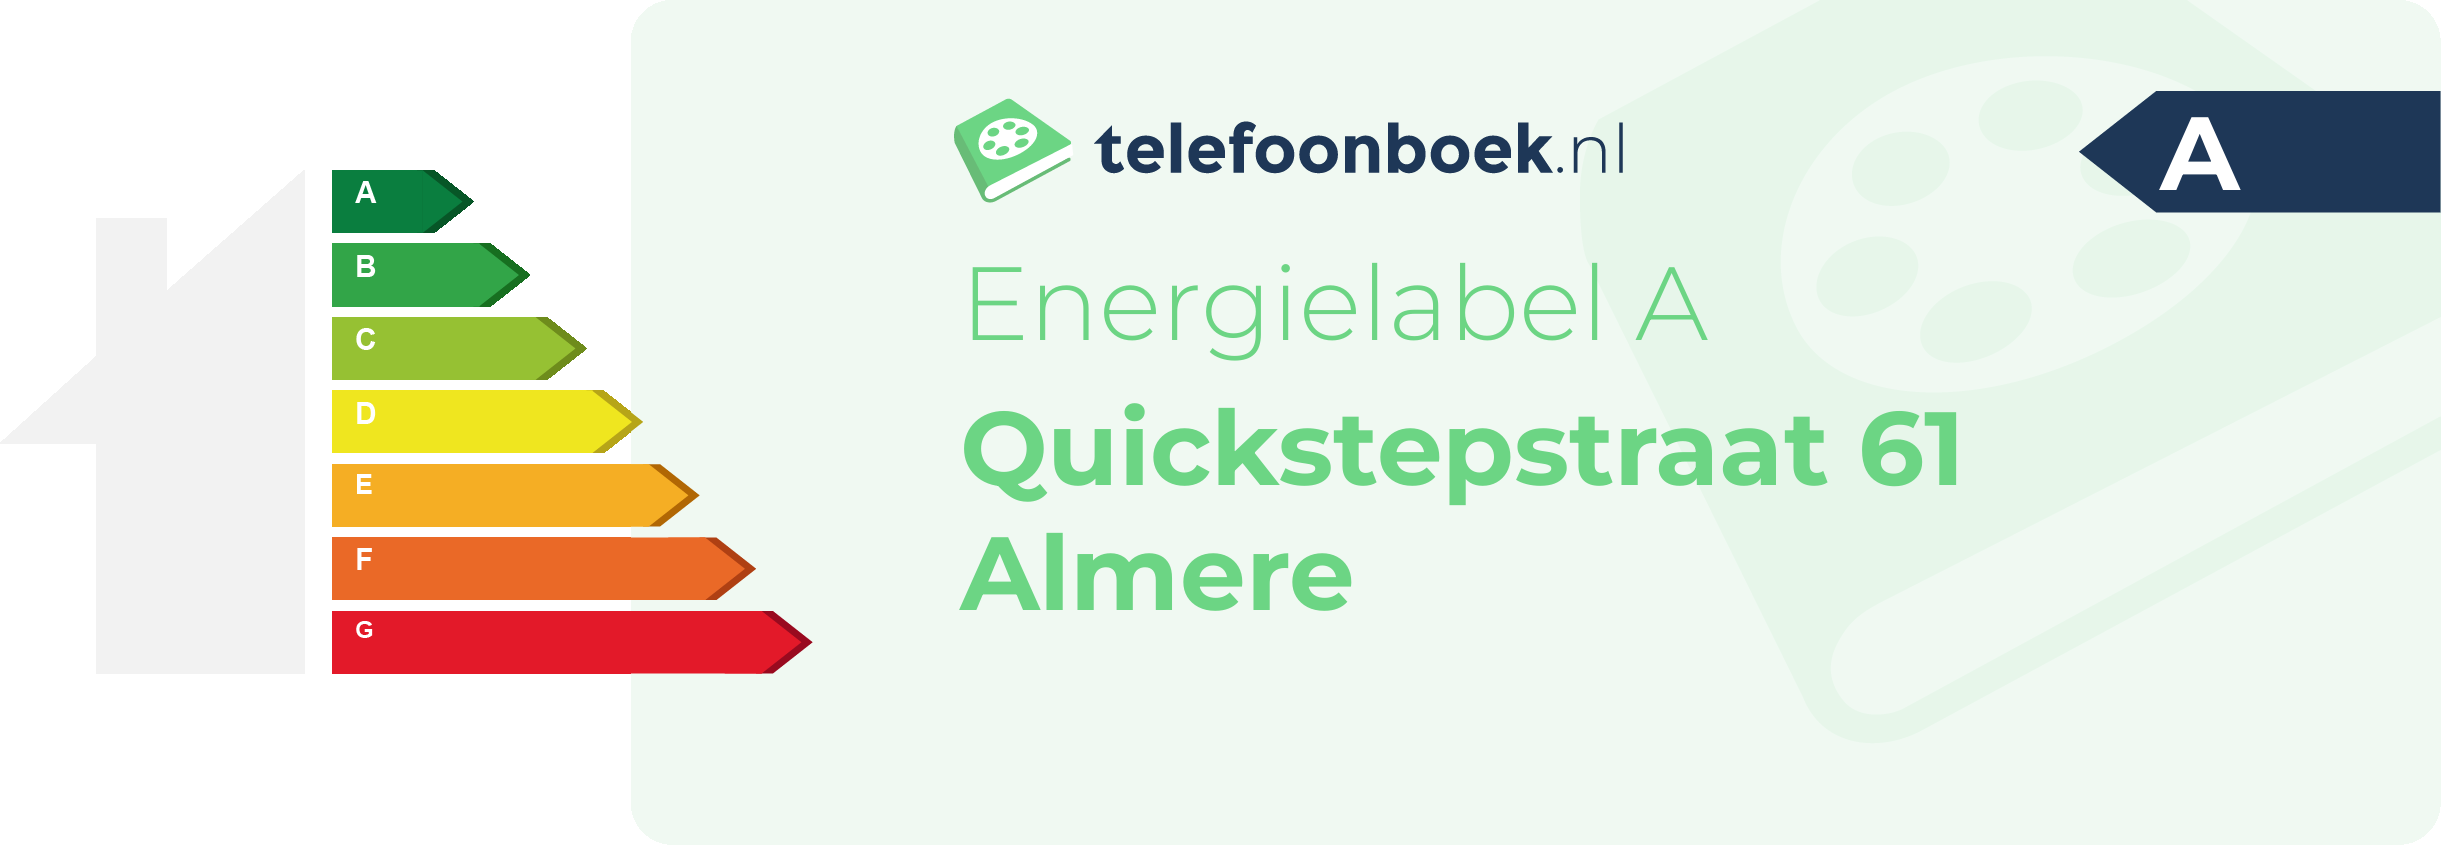 Energielabel Quickstepstraat 61 Almere